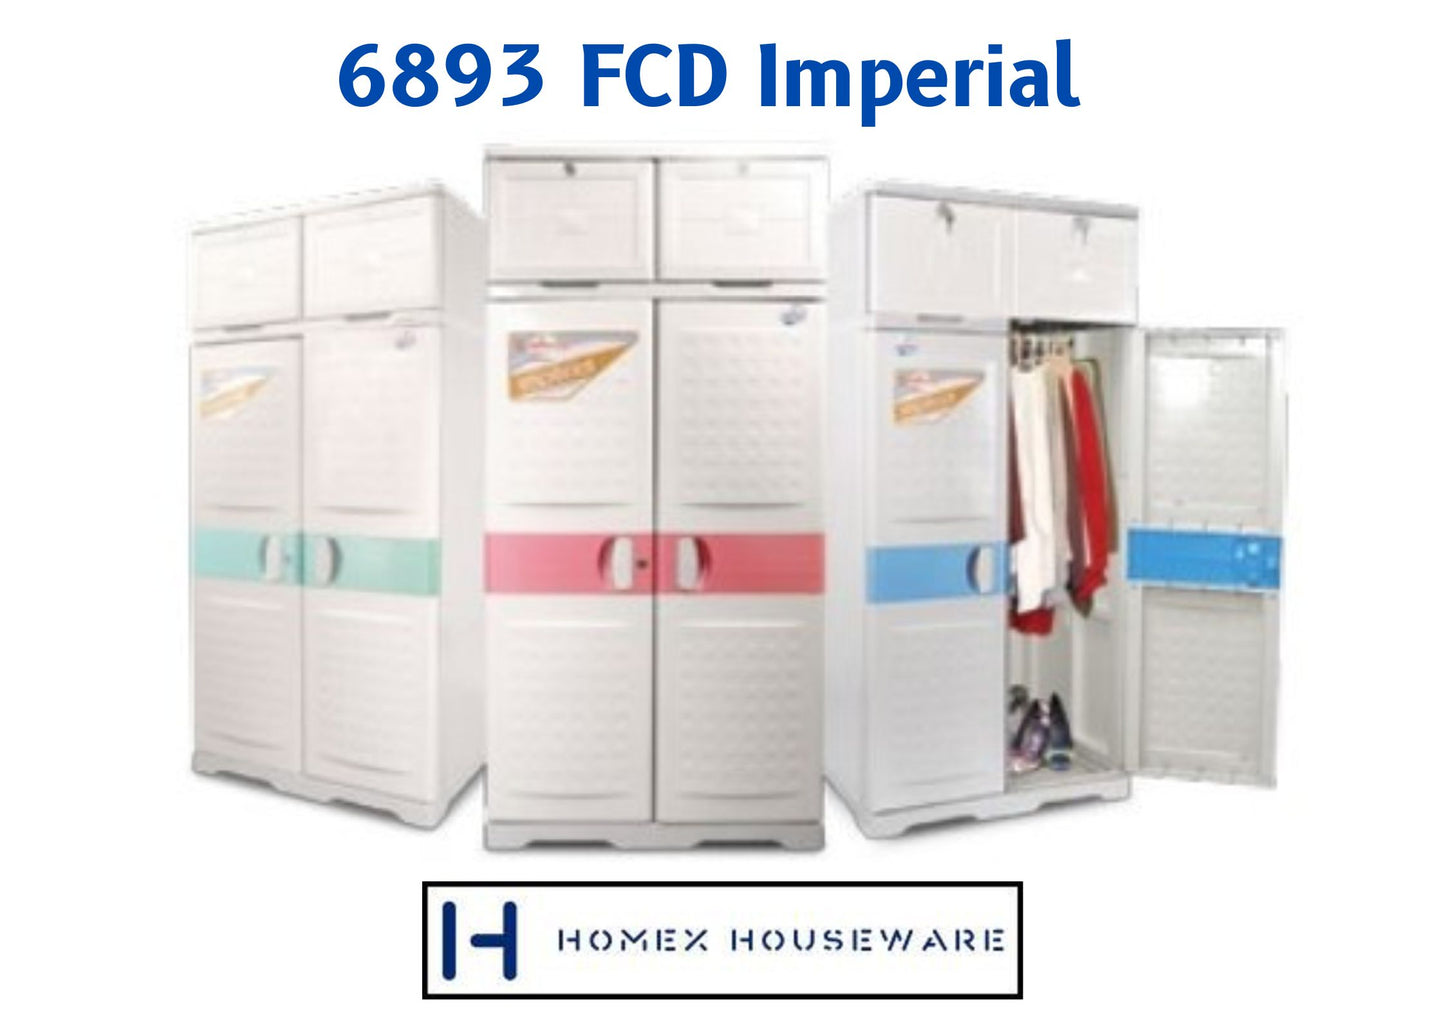 Imperial 6893 FCD Caha De Oro